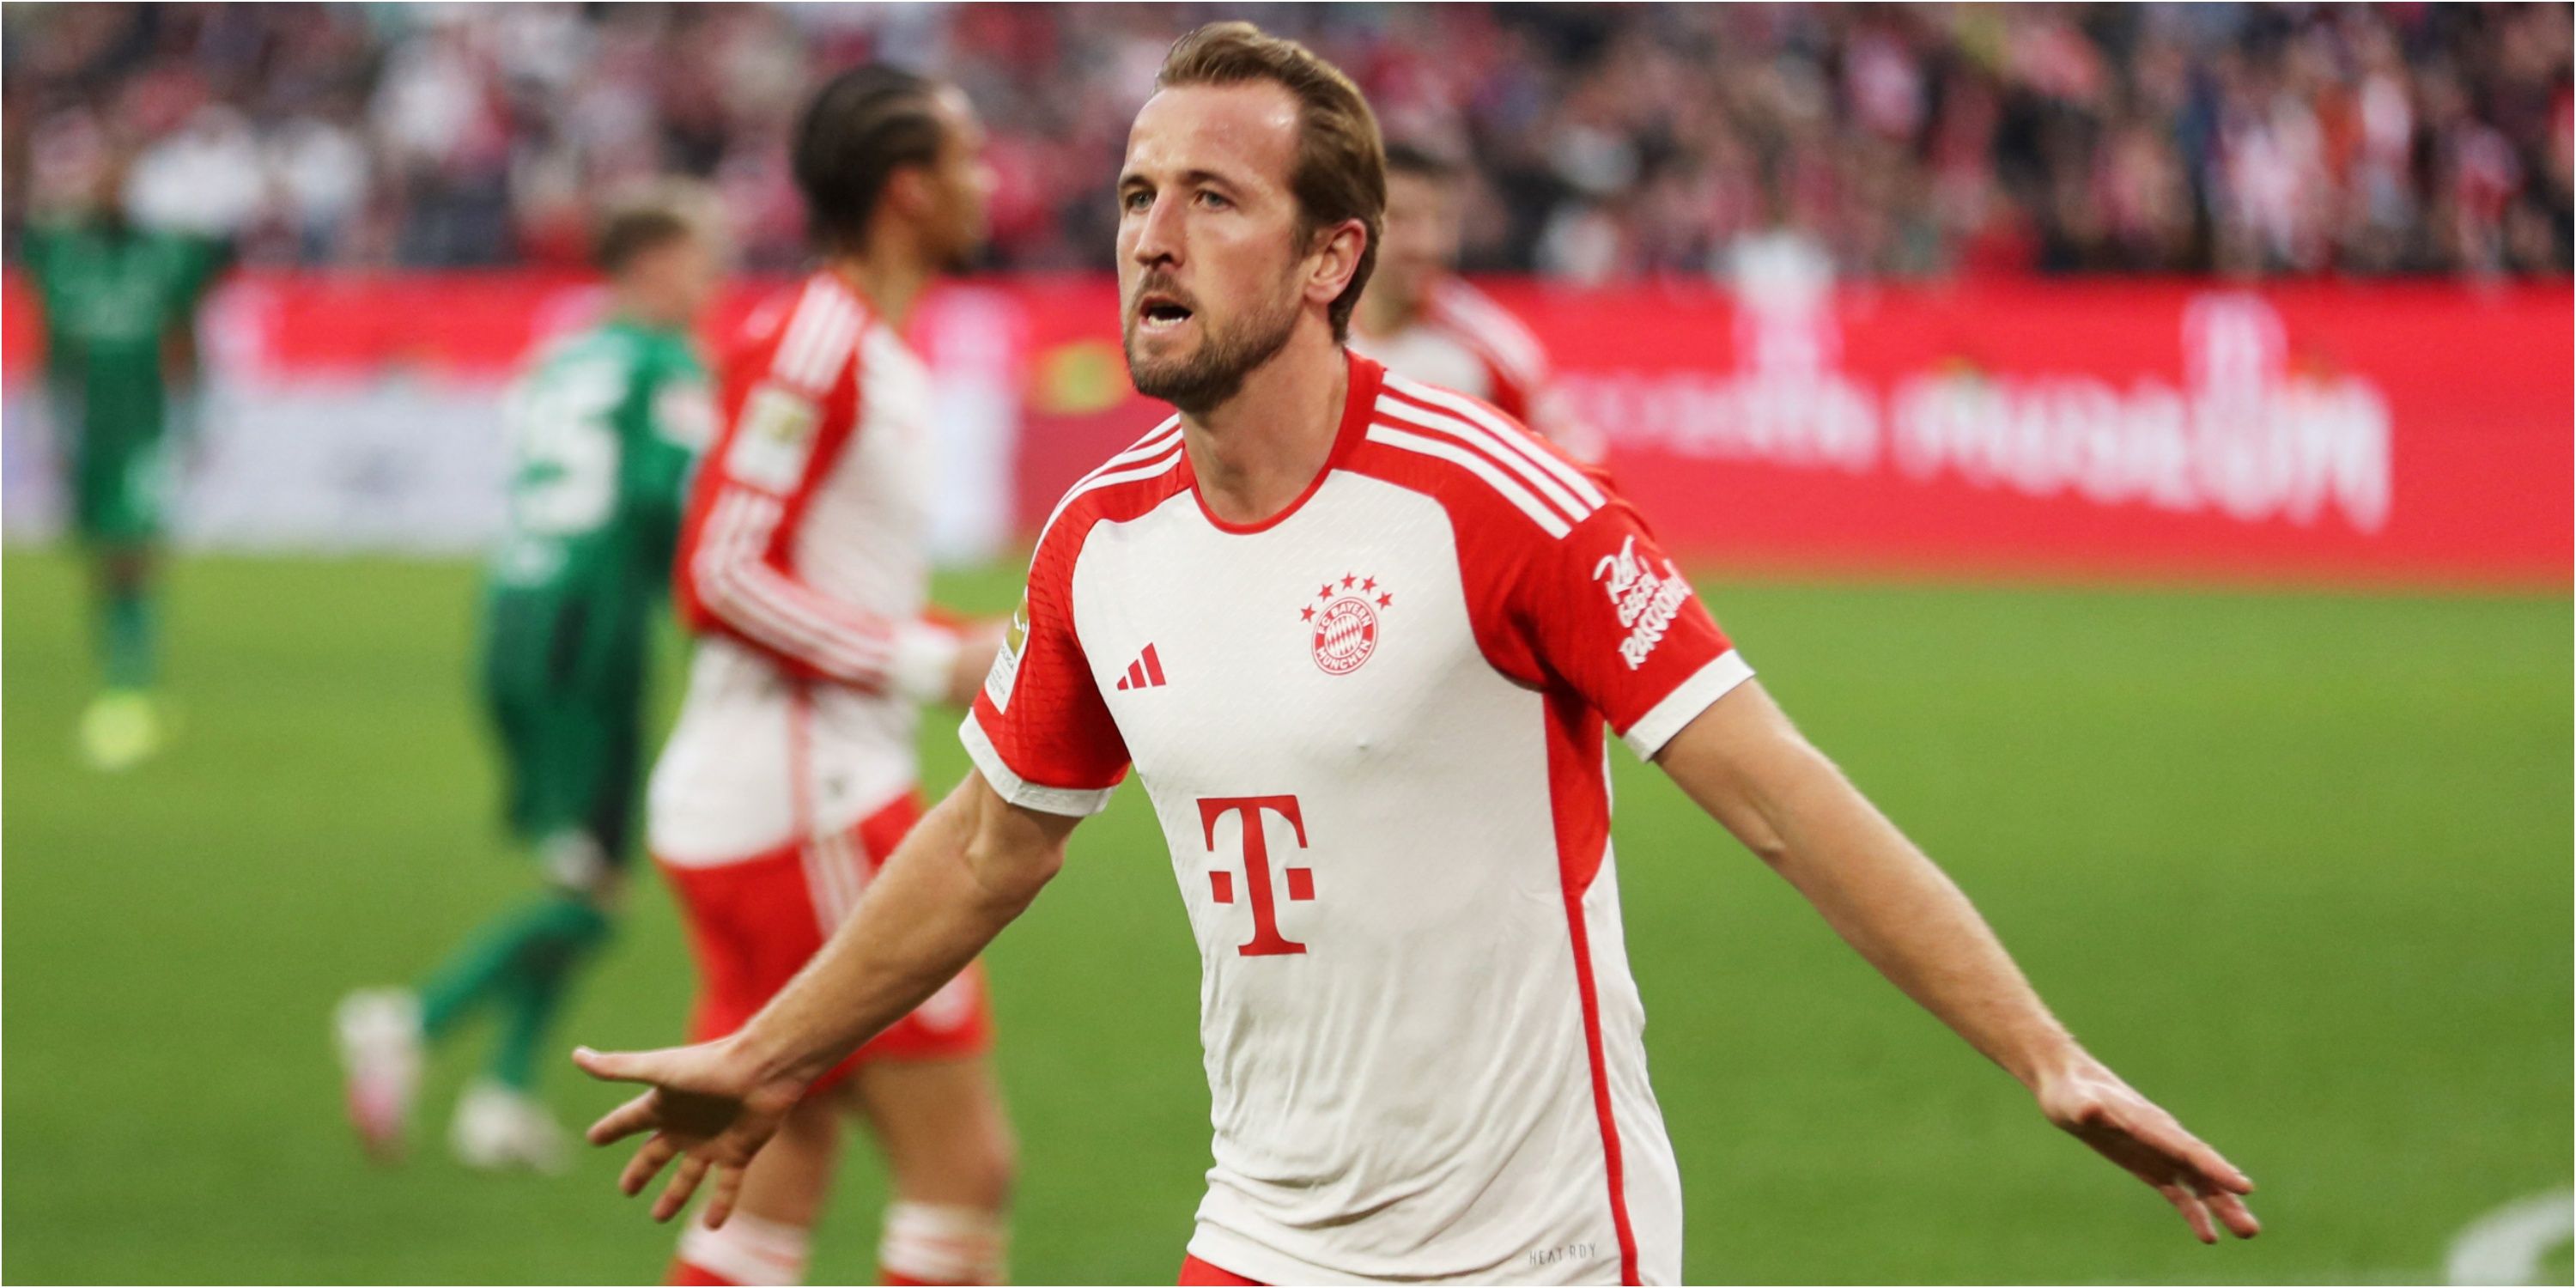 Harry Kane celebrates scoring for Bayern Munich